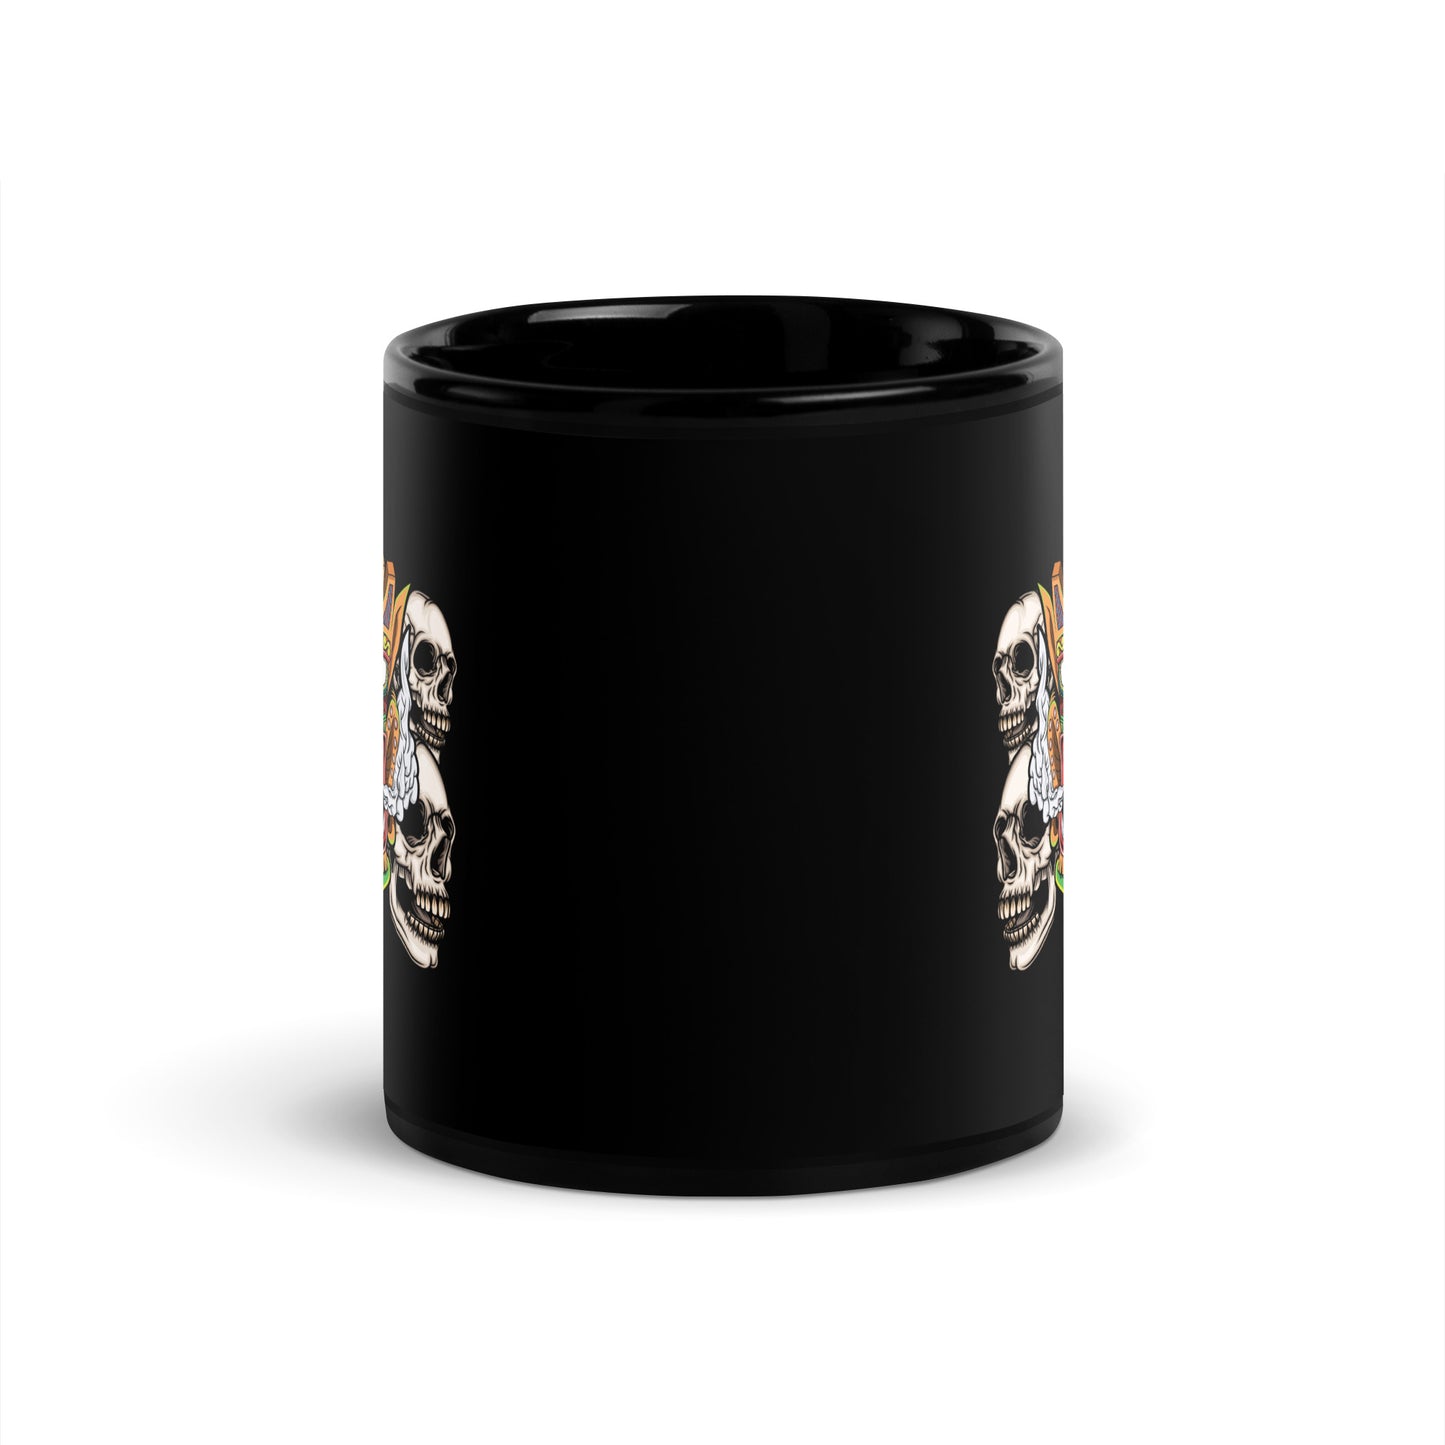 Tiki Skull Coffee Mug